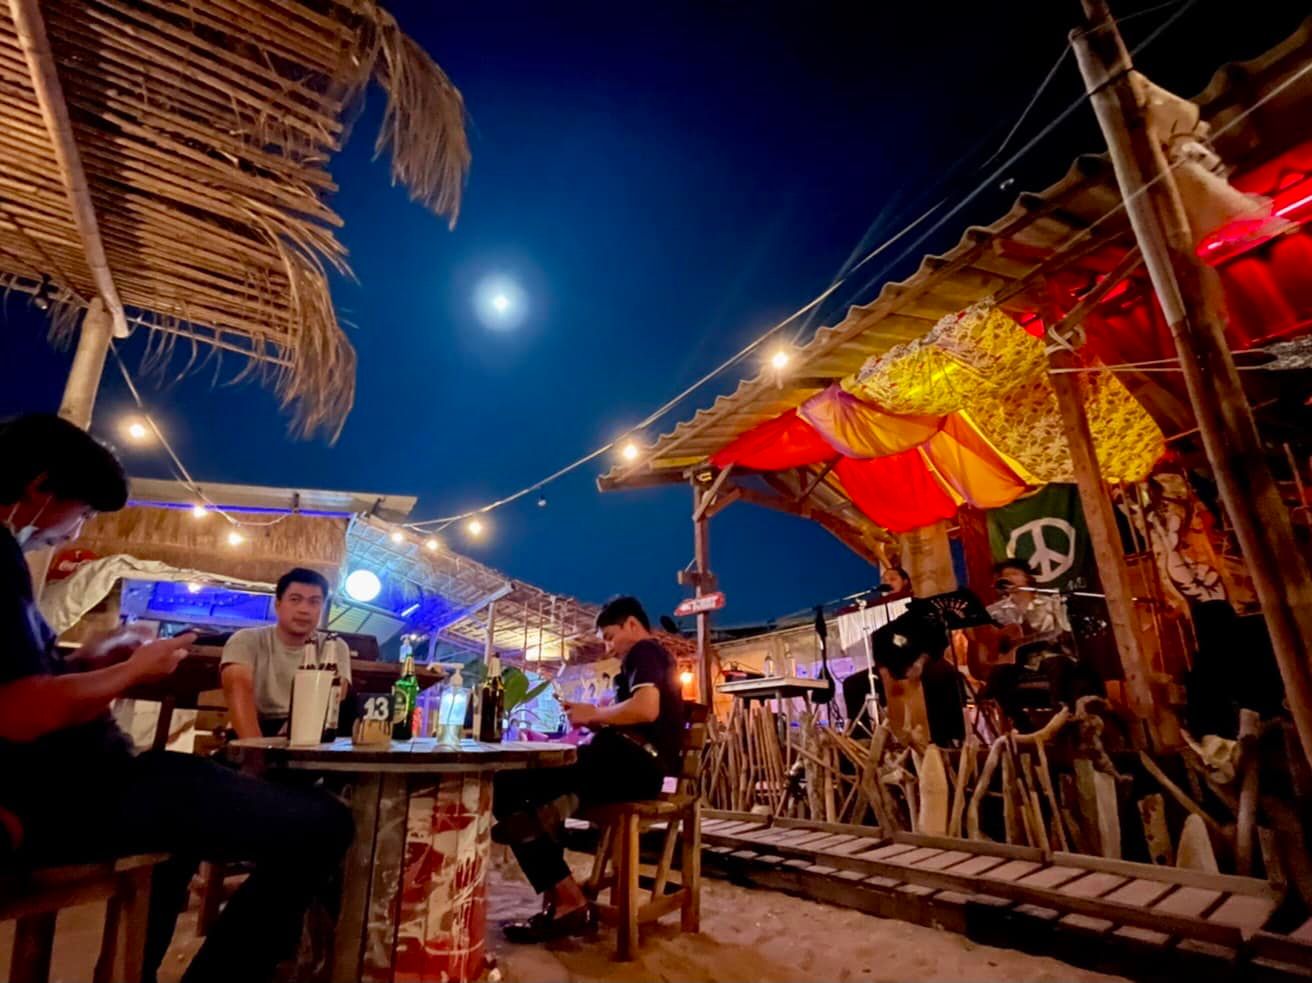 Laelay Bangsaen Cafe&Bar (แลเล บางแสน คาเฟ่&บาร์) : Chon Buri (ชลบุรี)